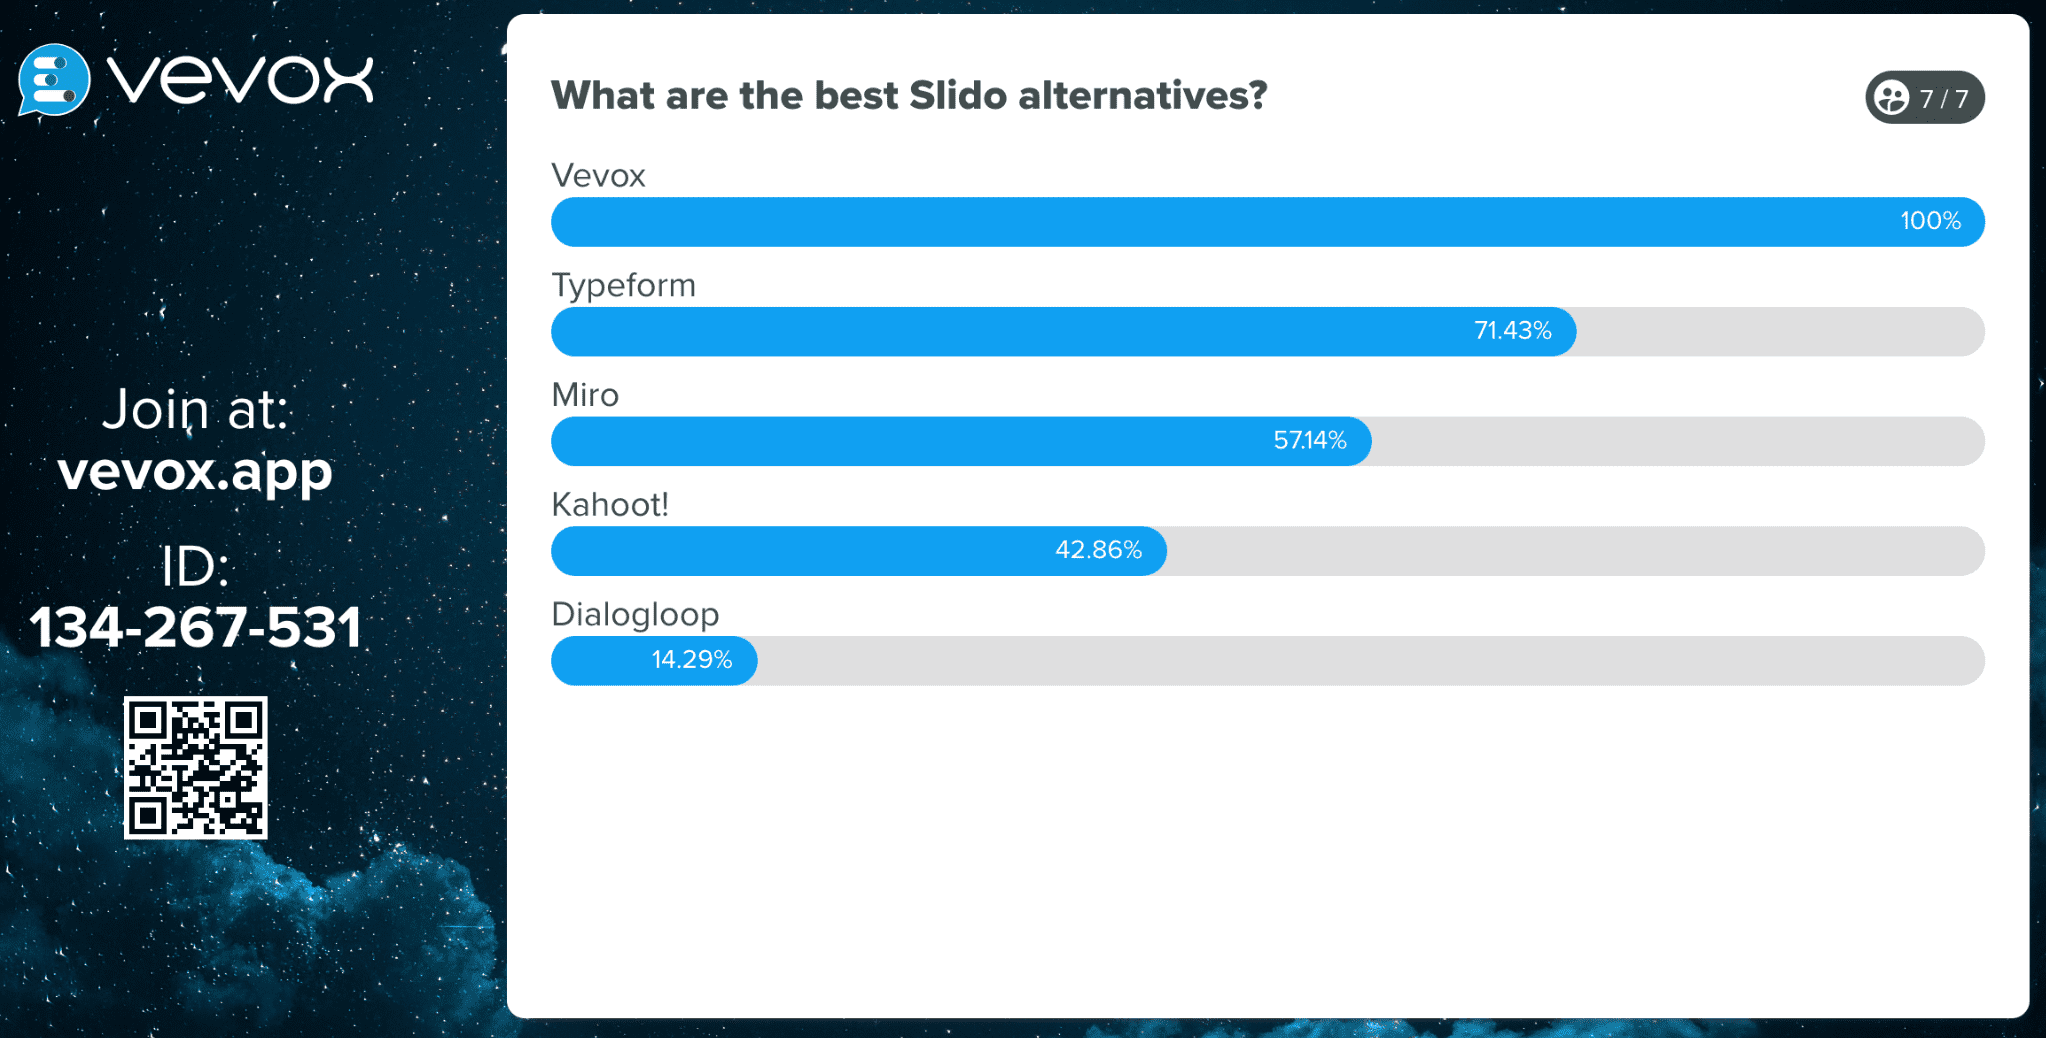 4 of the best Slido alternatives